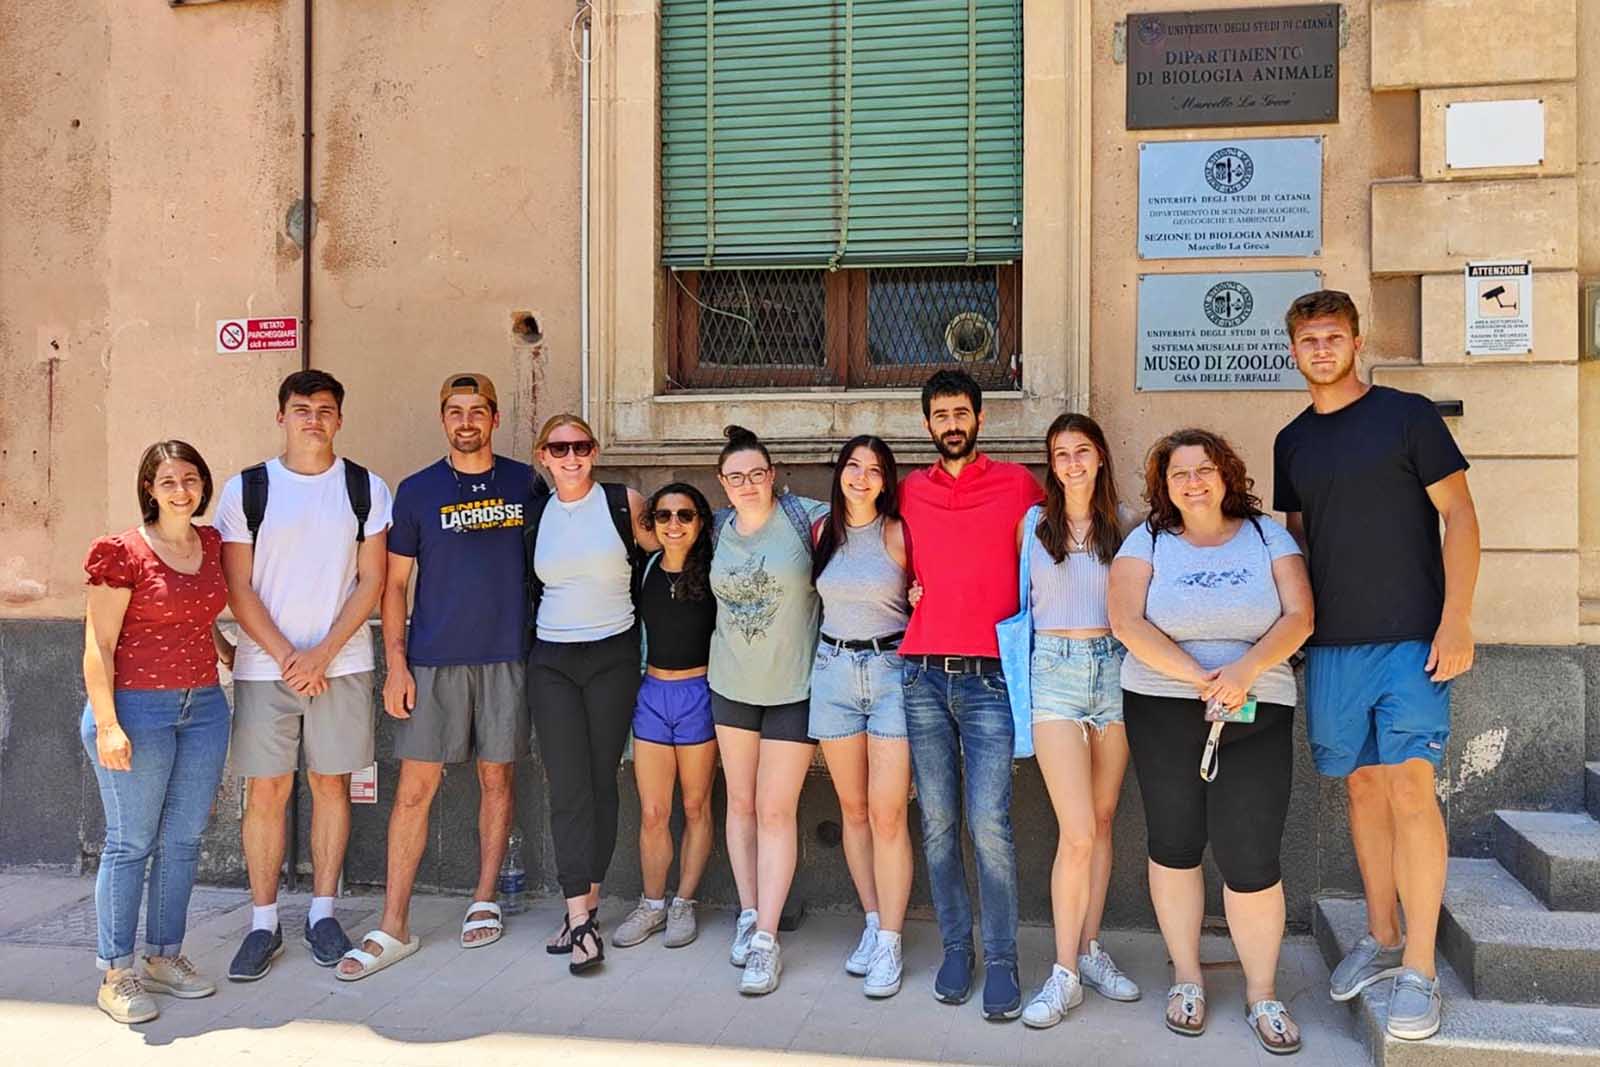 Studenti americani “a lezione” di biologia marina all’Università di Catania